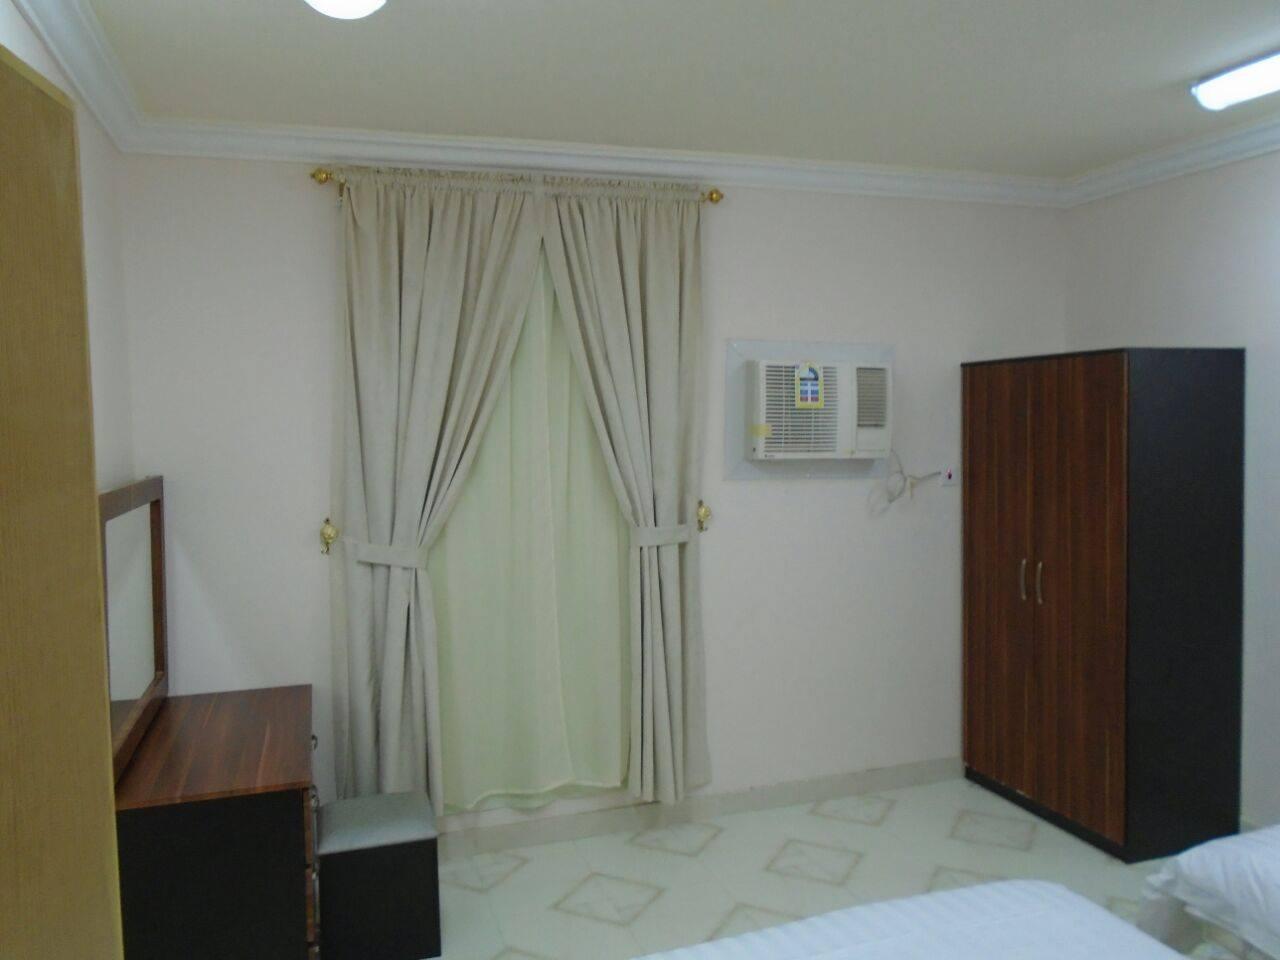 Yusra Hotel Apartment - sample desc